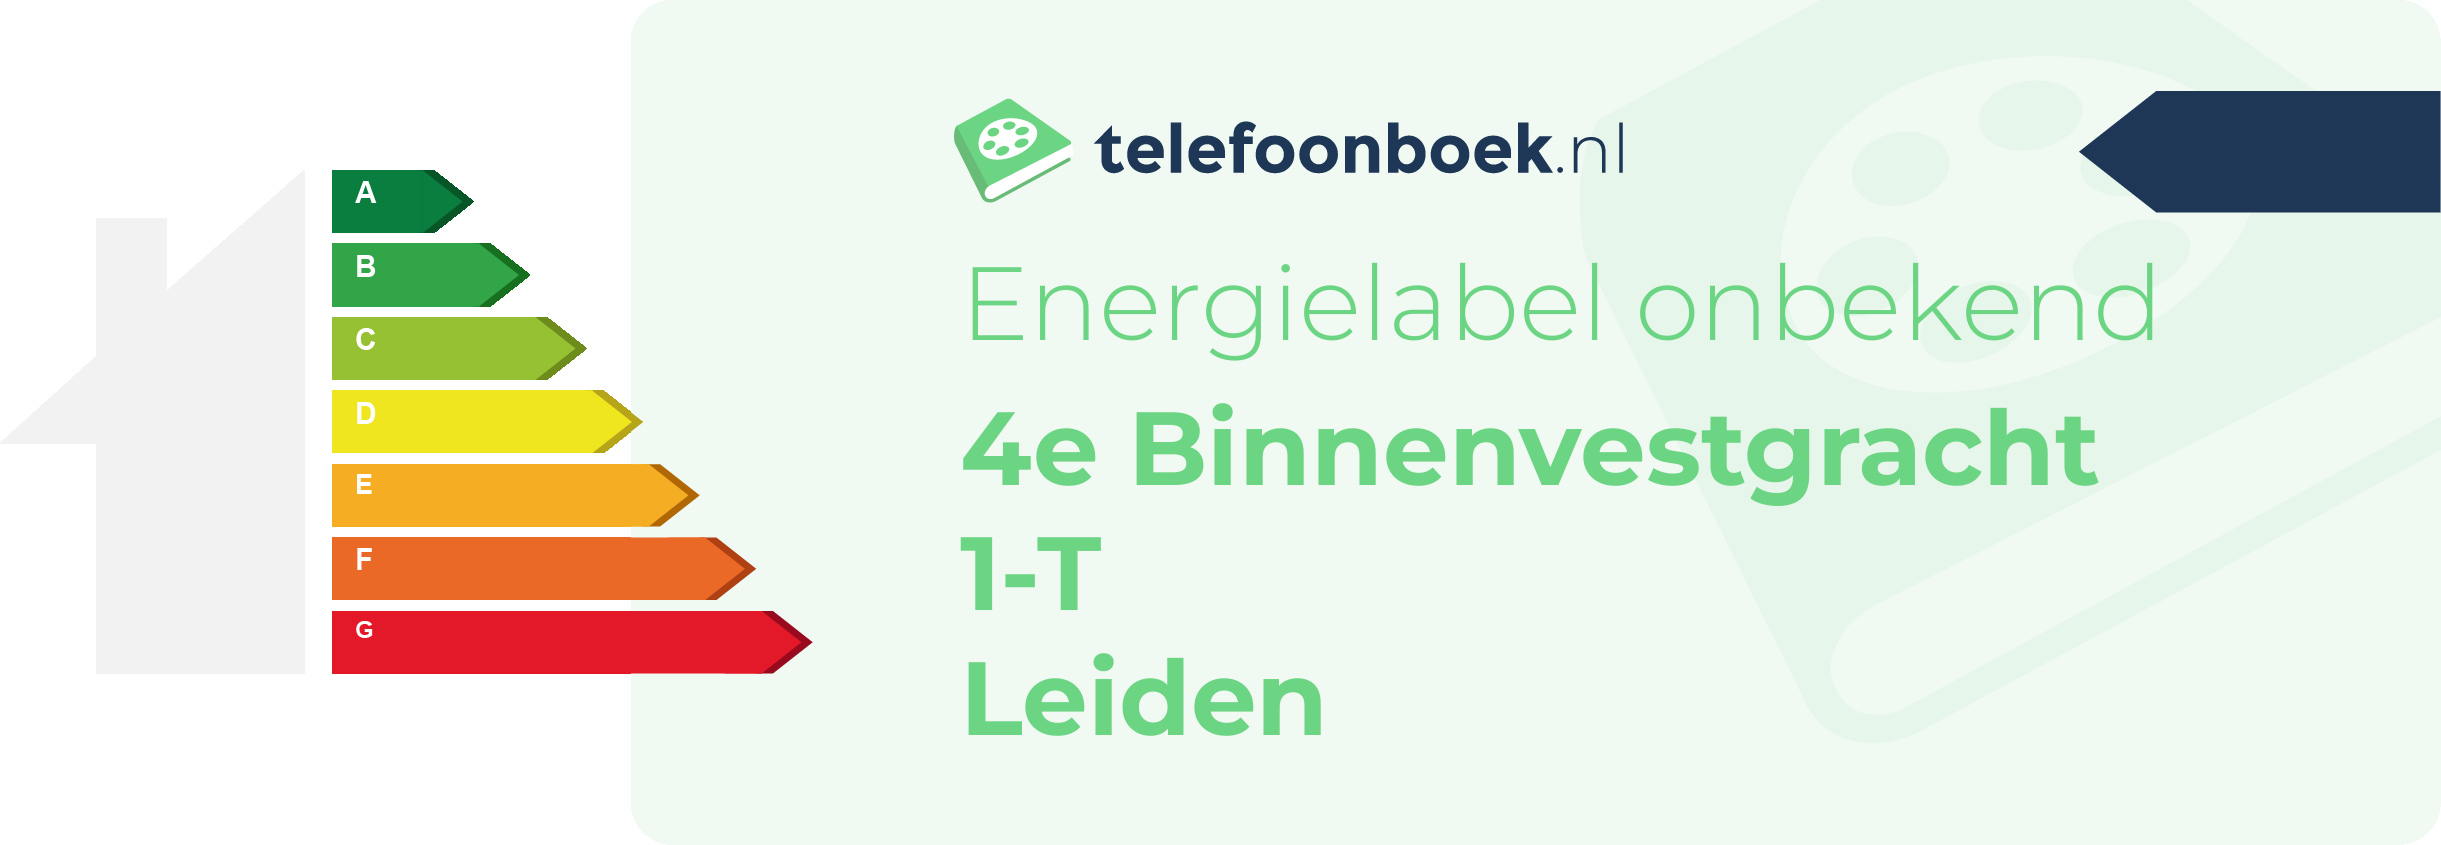 Energielabel 4e Binnenvestgracht 1-T Leiden